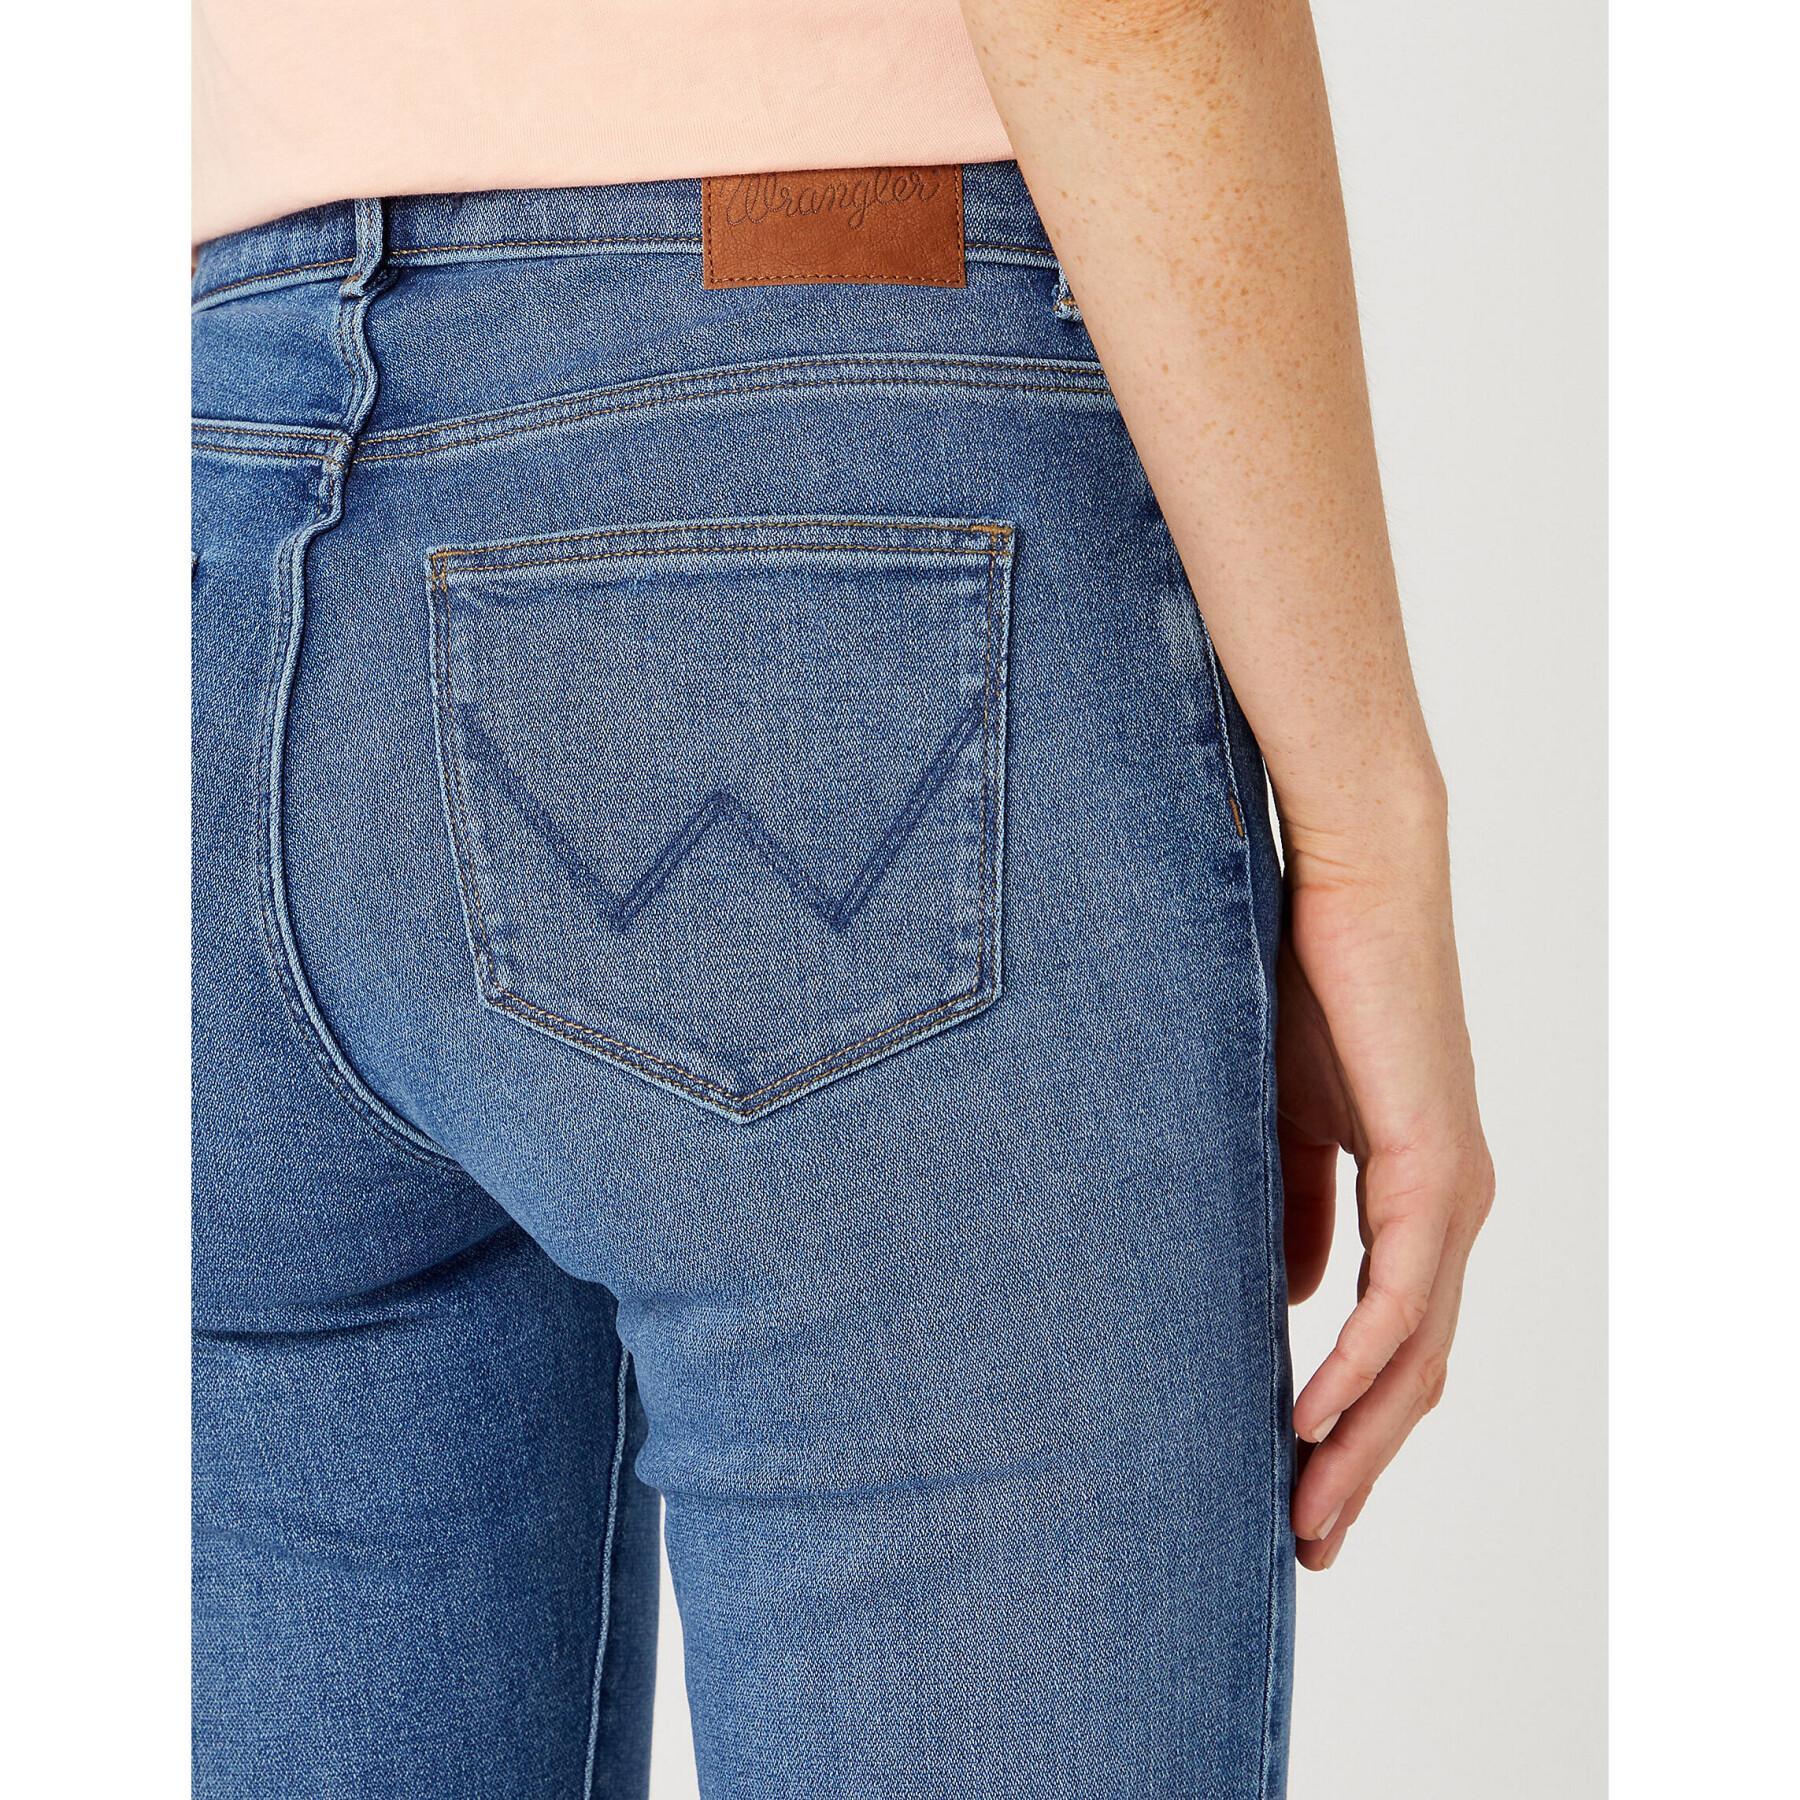 Jeans kobieta Wrangler Bootcut